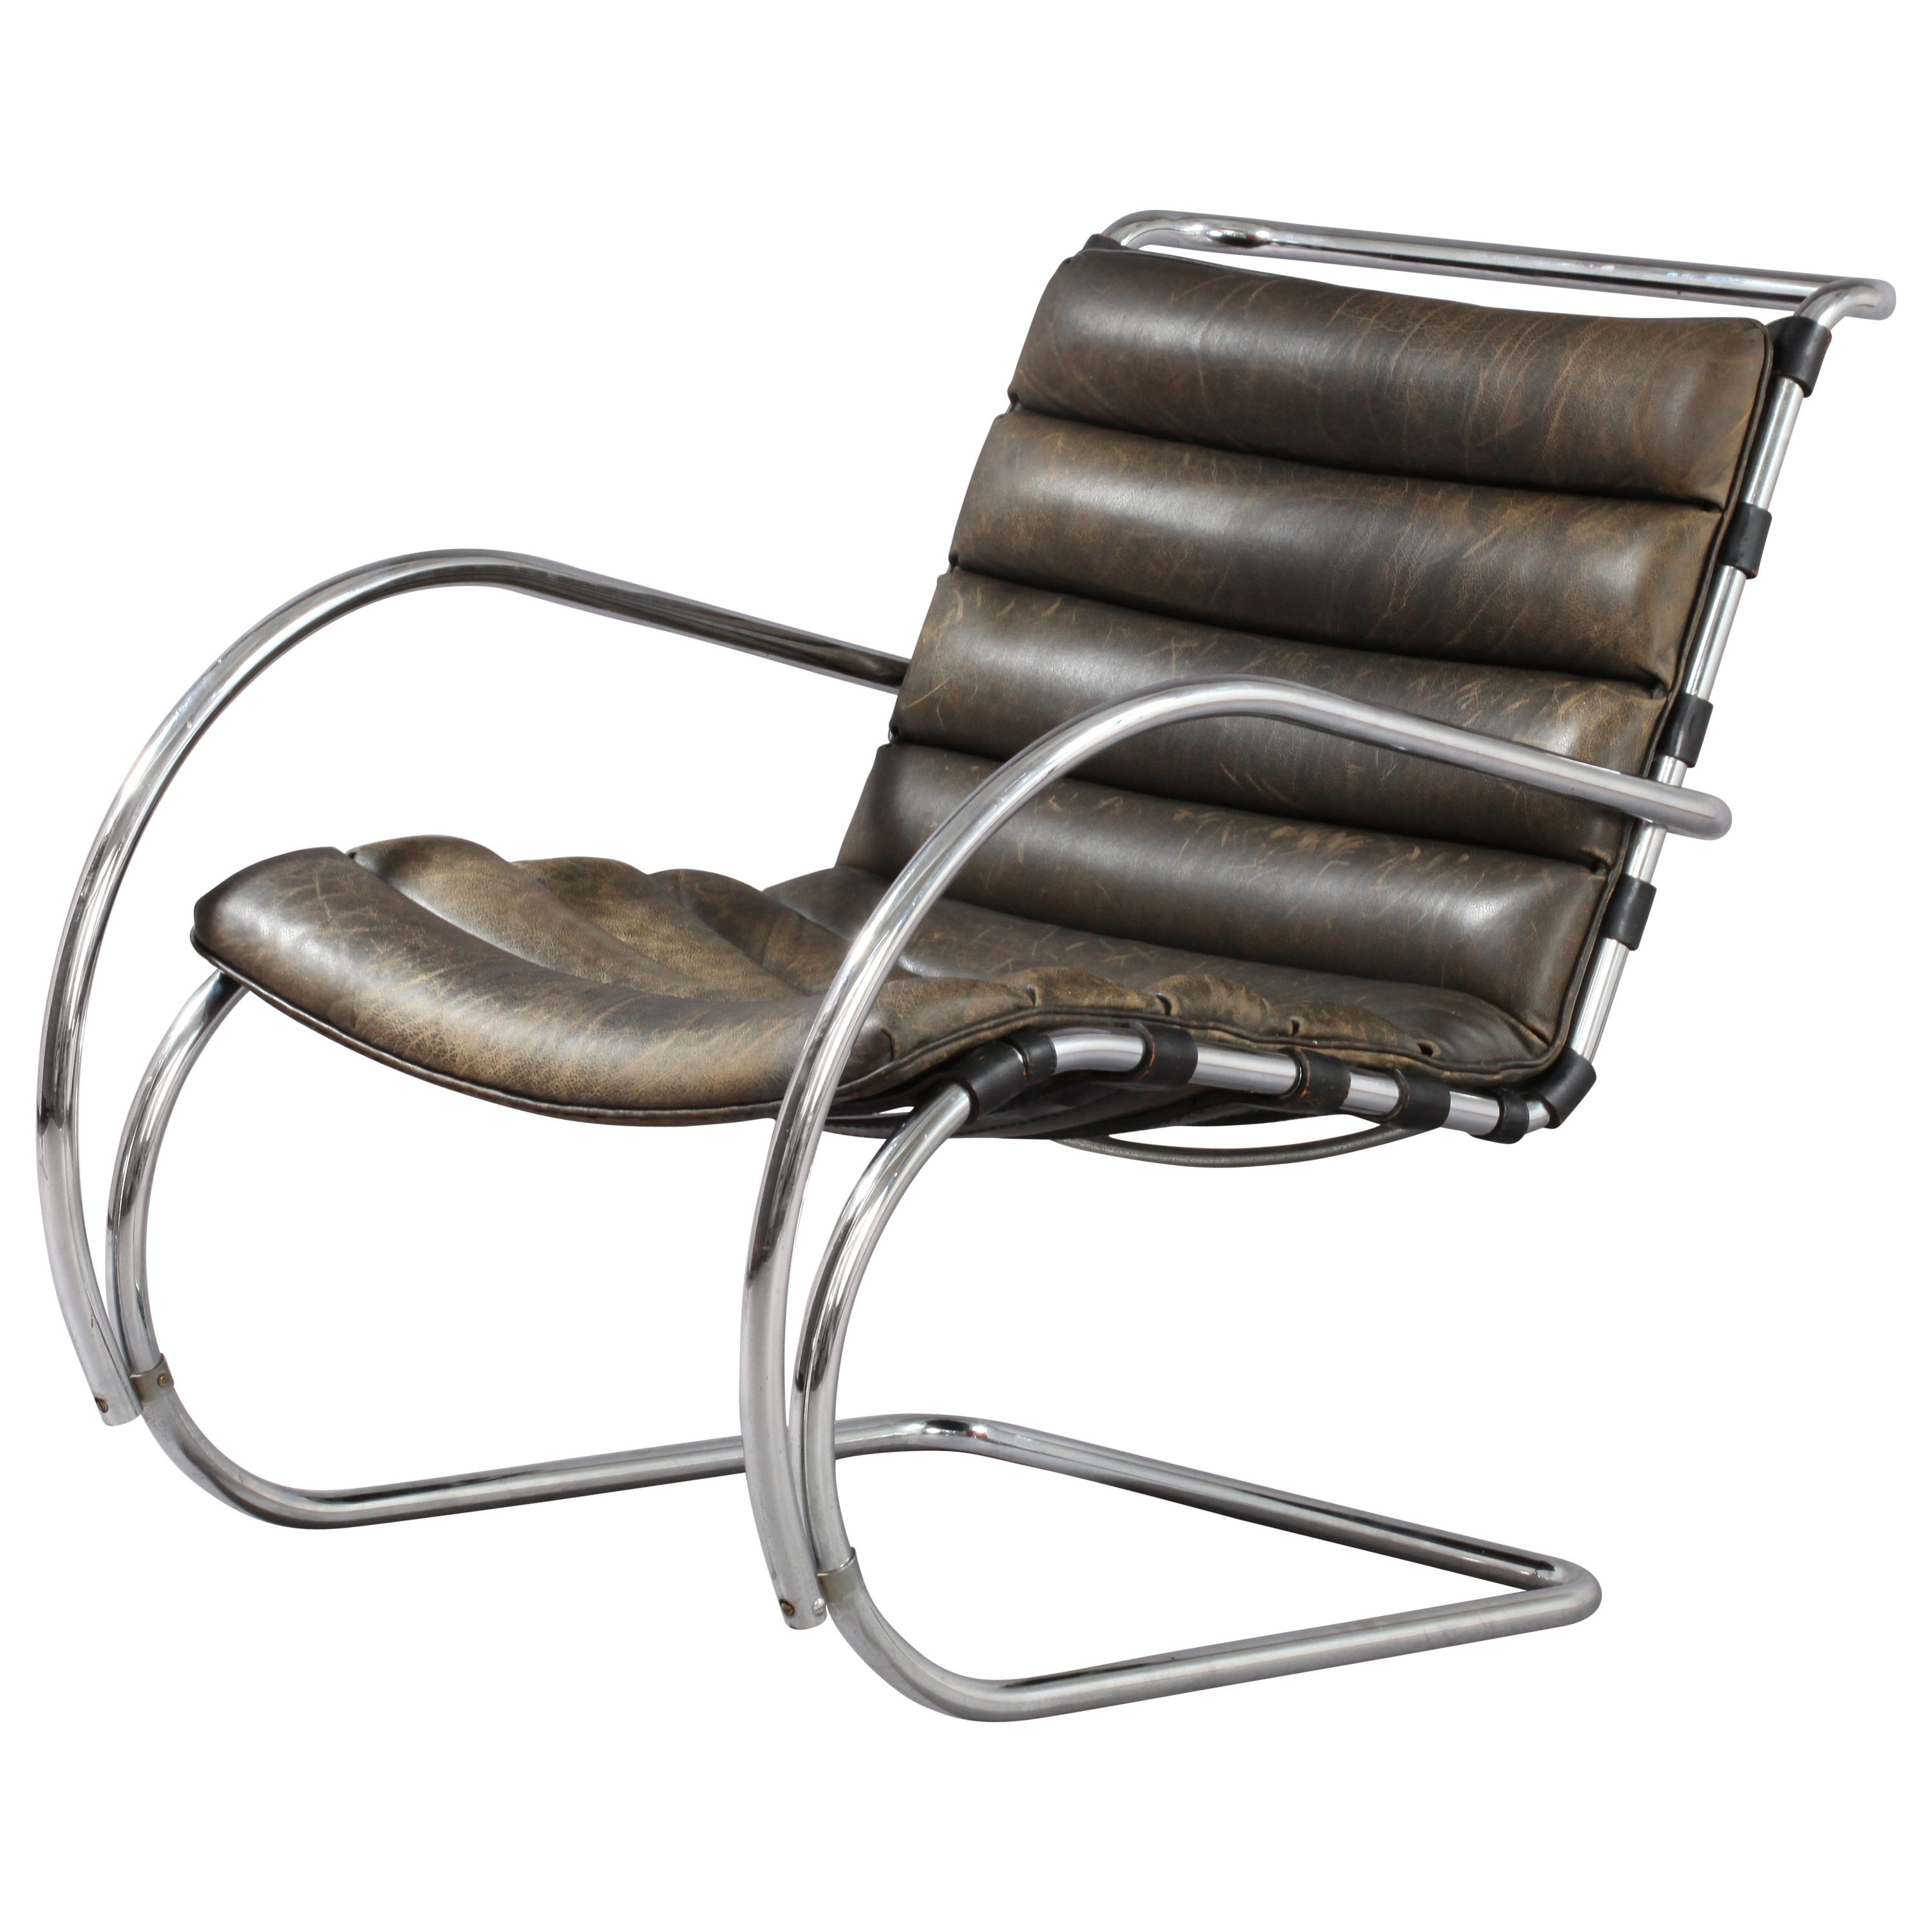 Mr Chair by Mies van der Rohe, Knoll International